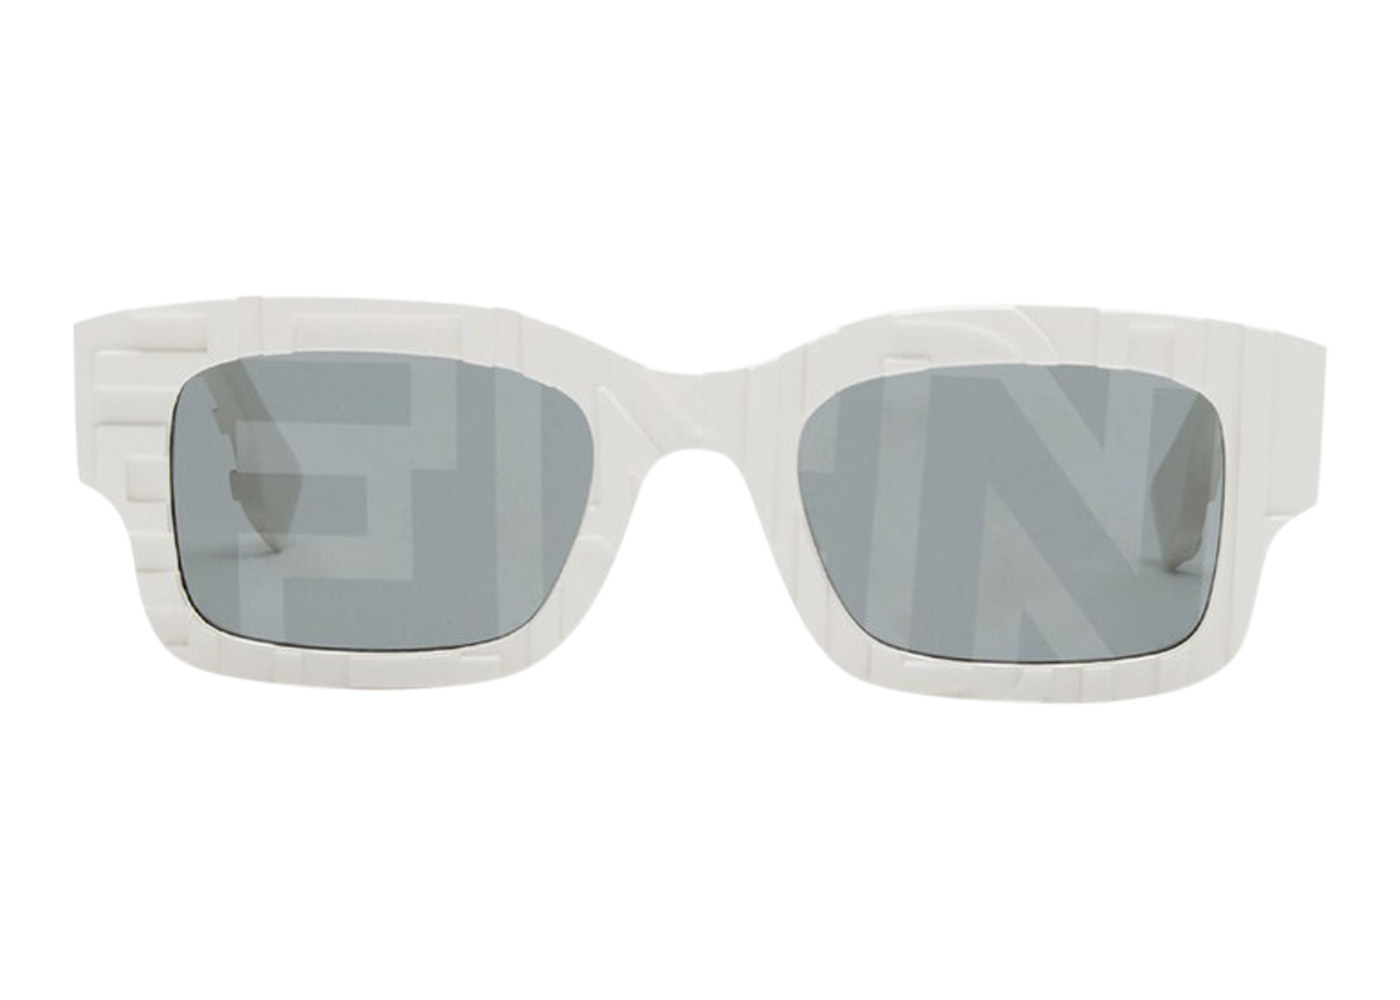 Fendi by Marc Jacobs The Fendi White Sunglasses White in Acetate - CN